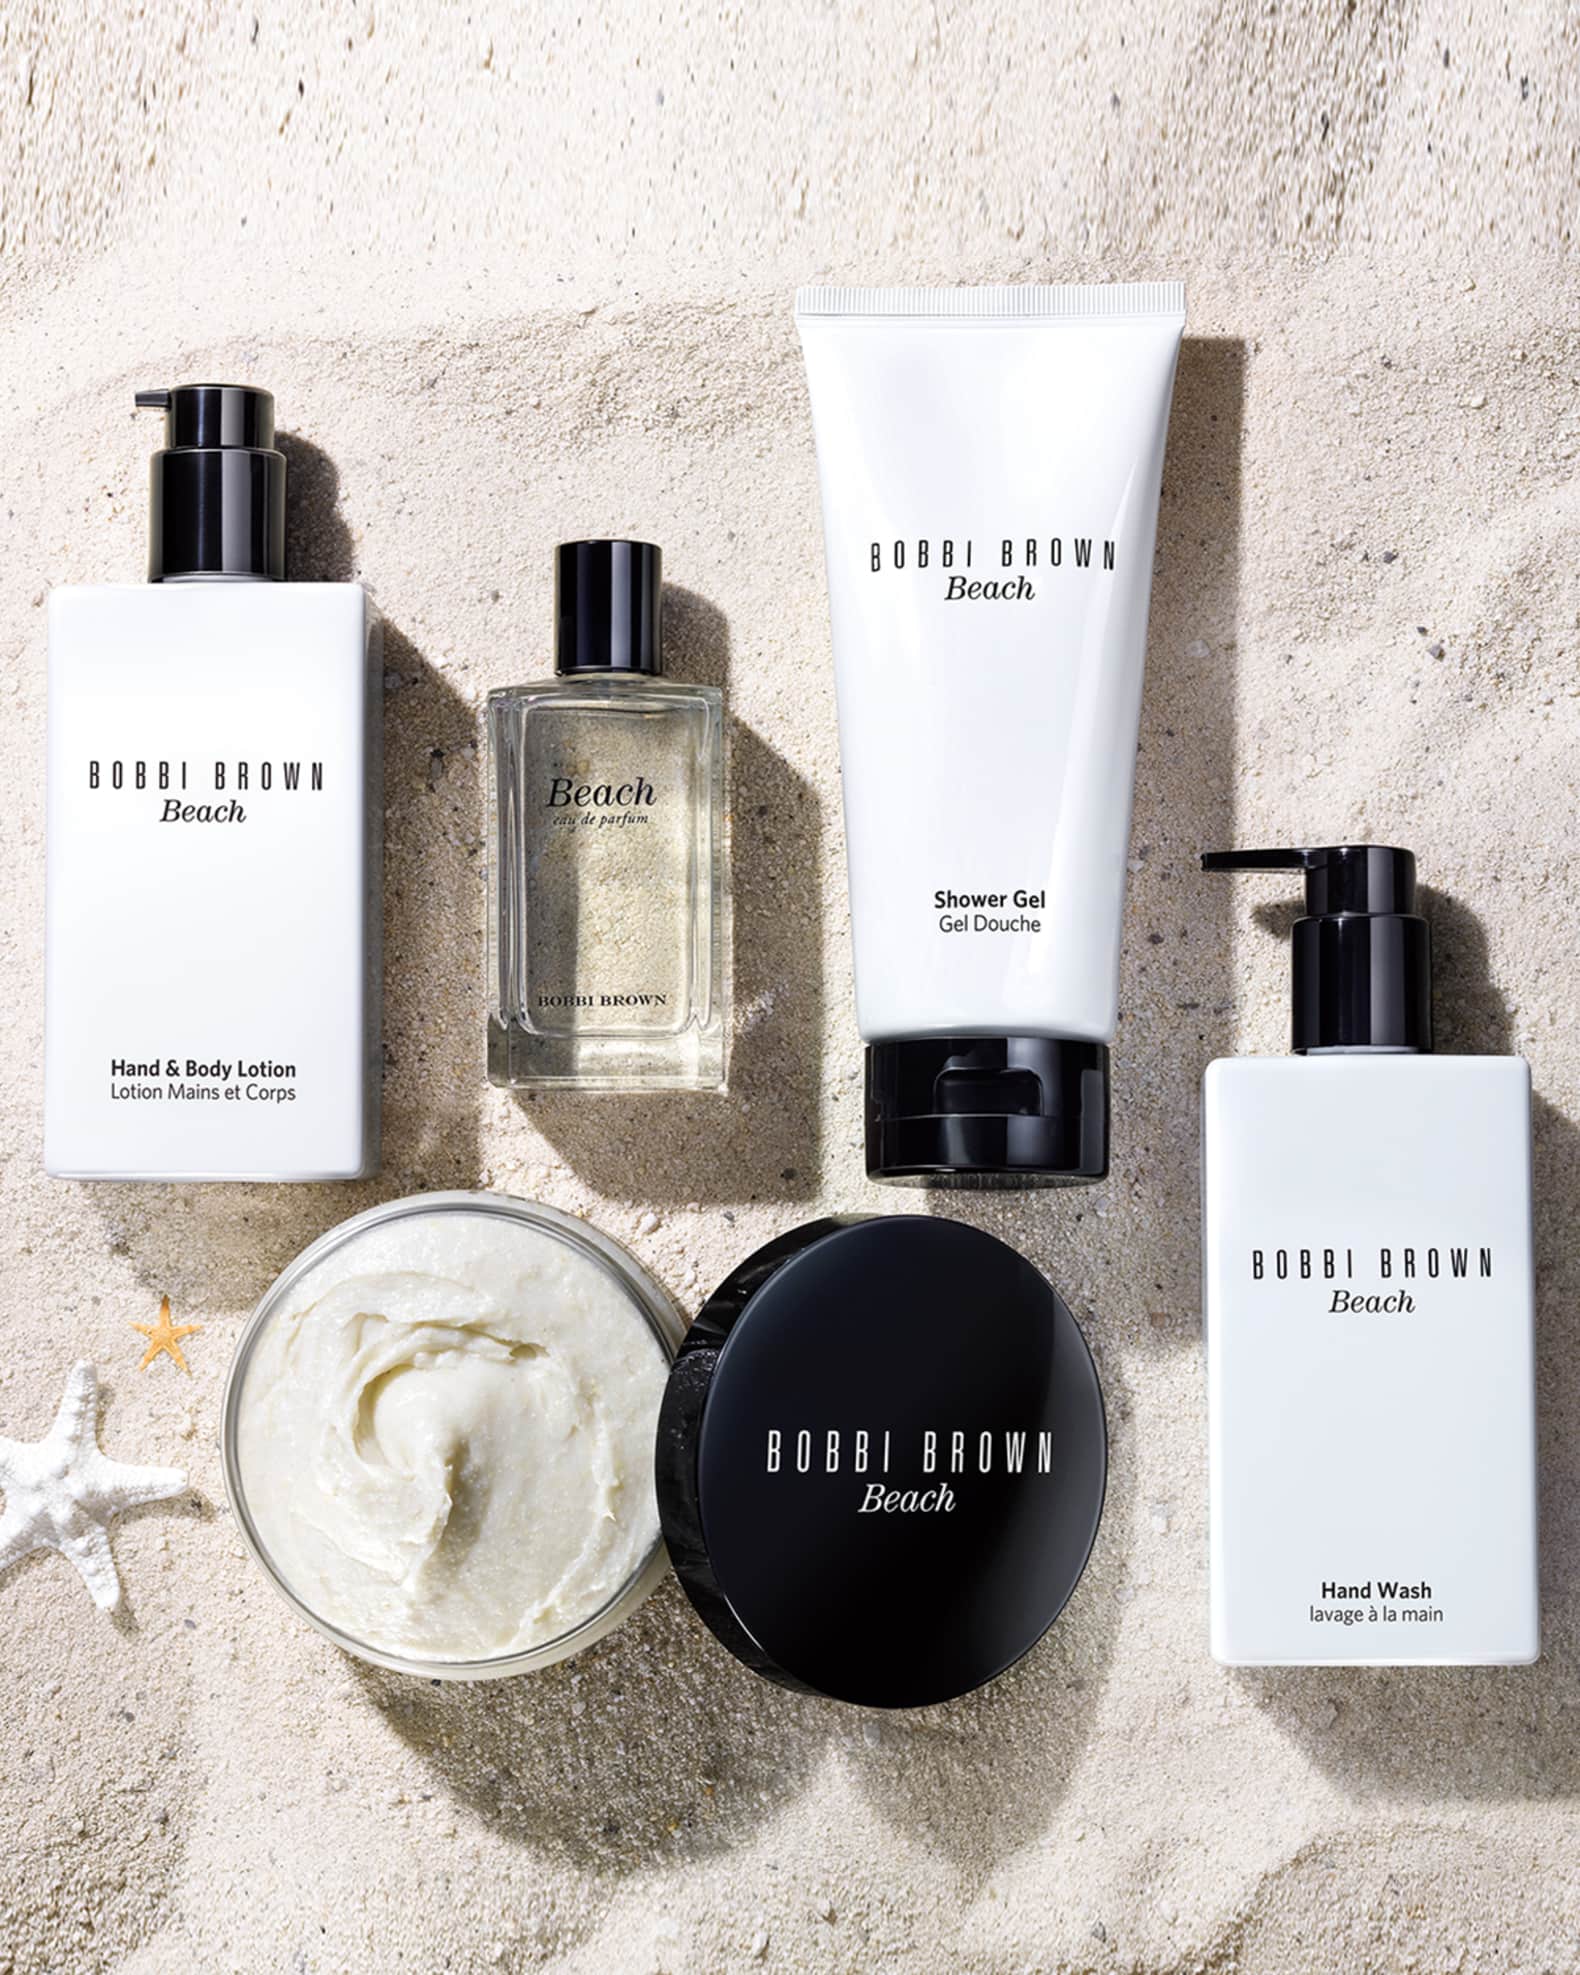 Louis Vuitton On The Beach, Perfume Sample